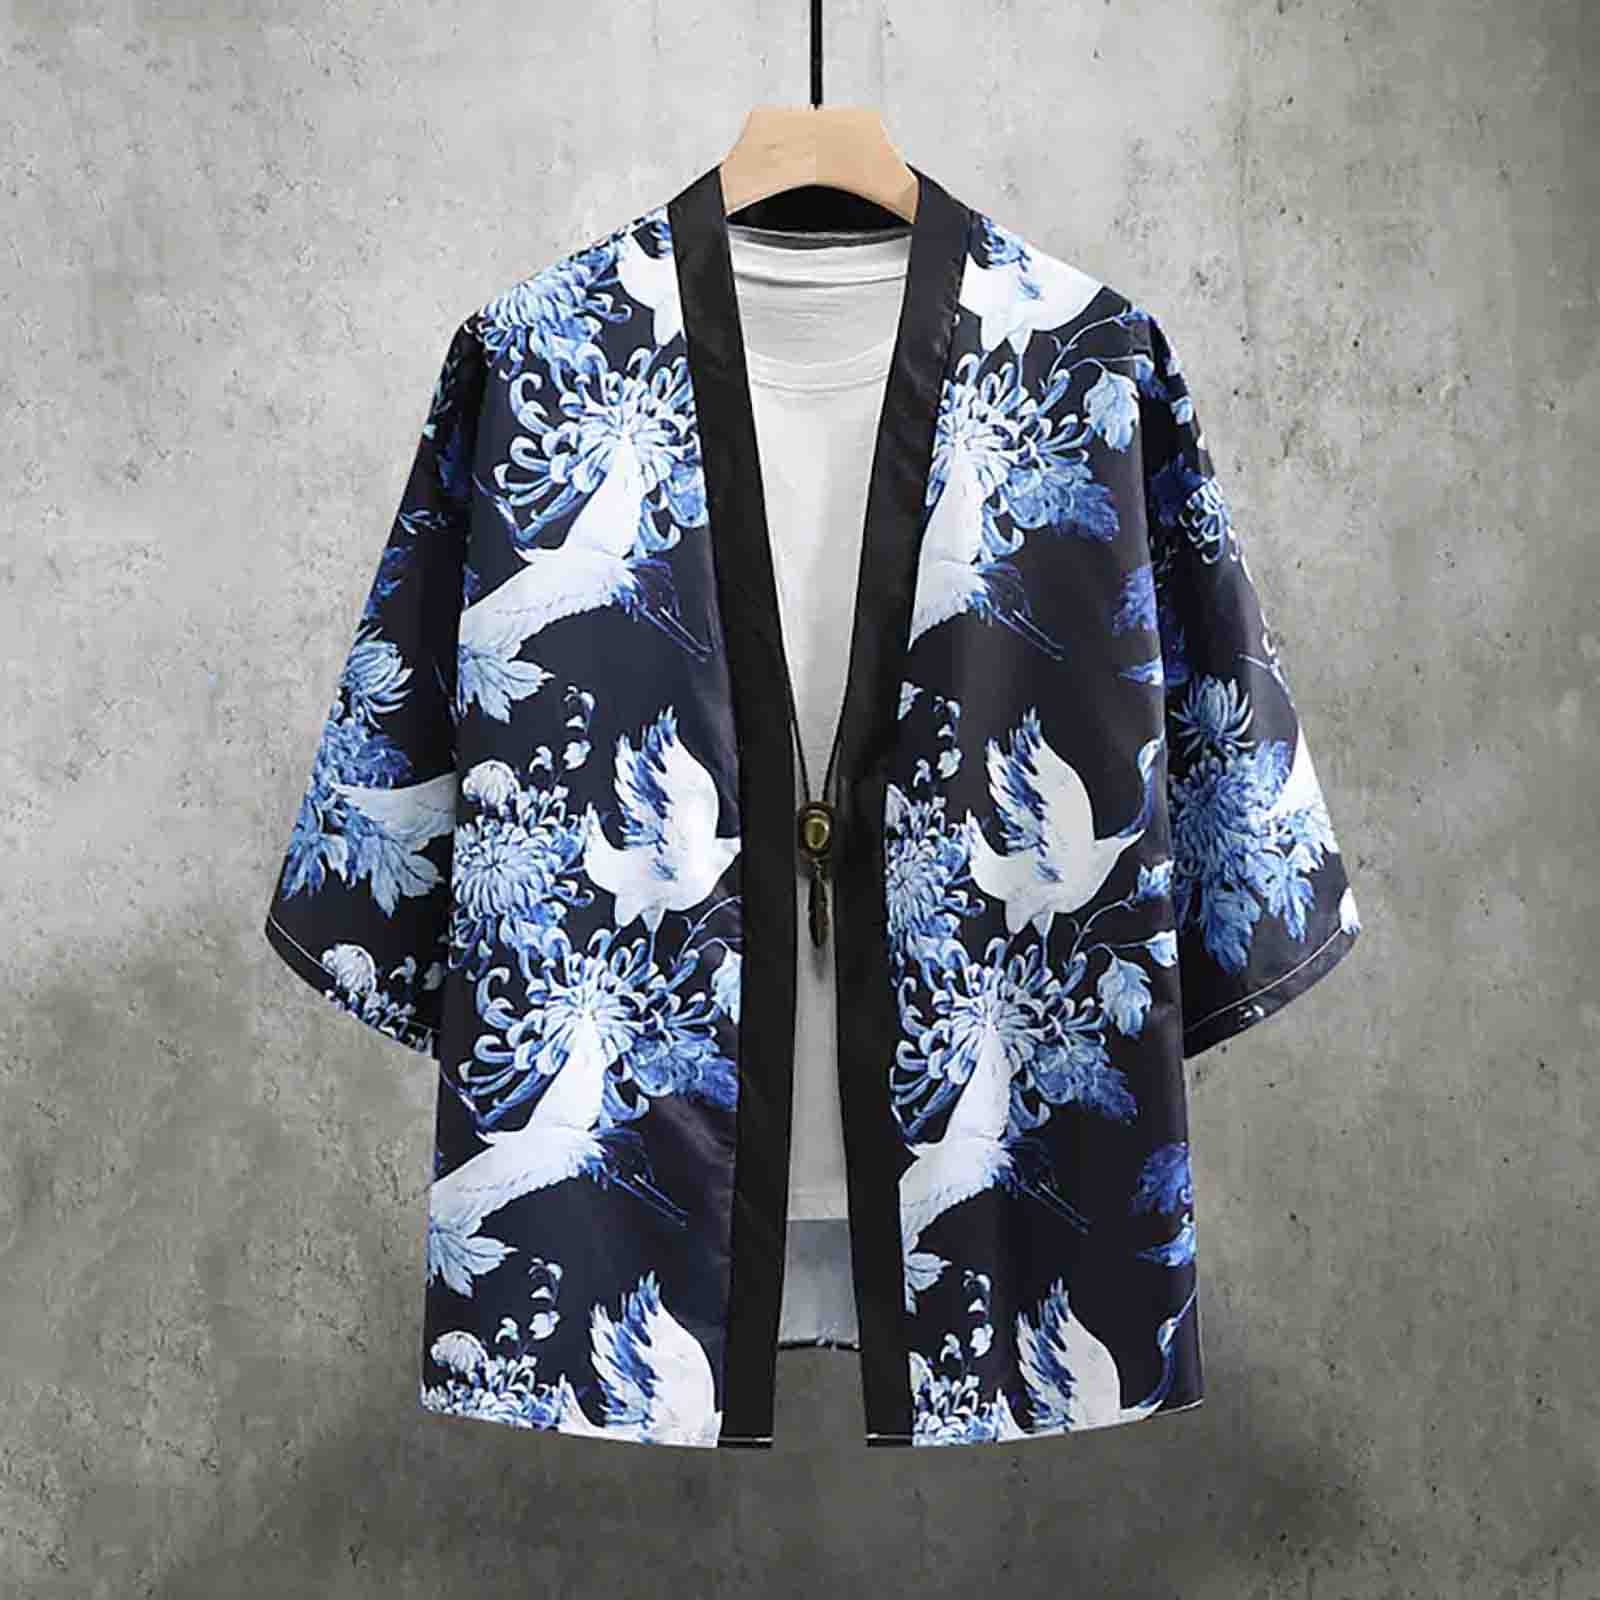 AngelSpace Mens Japanese Kimono 3/4 Sleeve Pure Sunscreen Casual Shirt